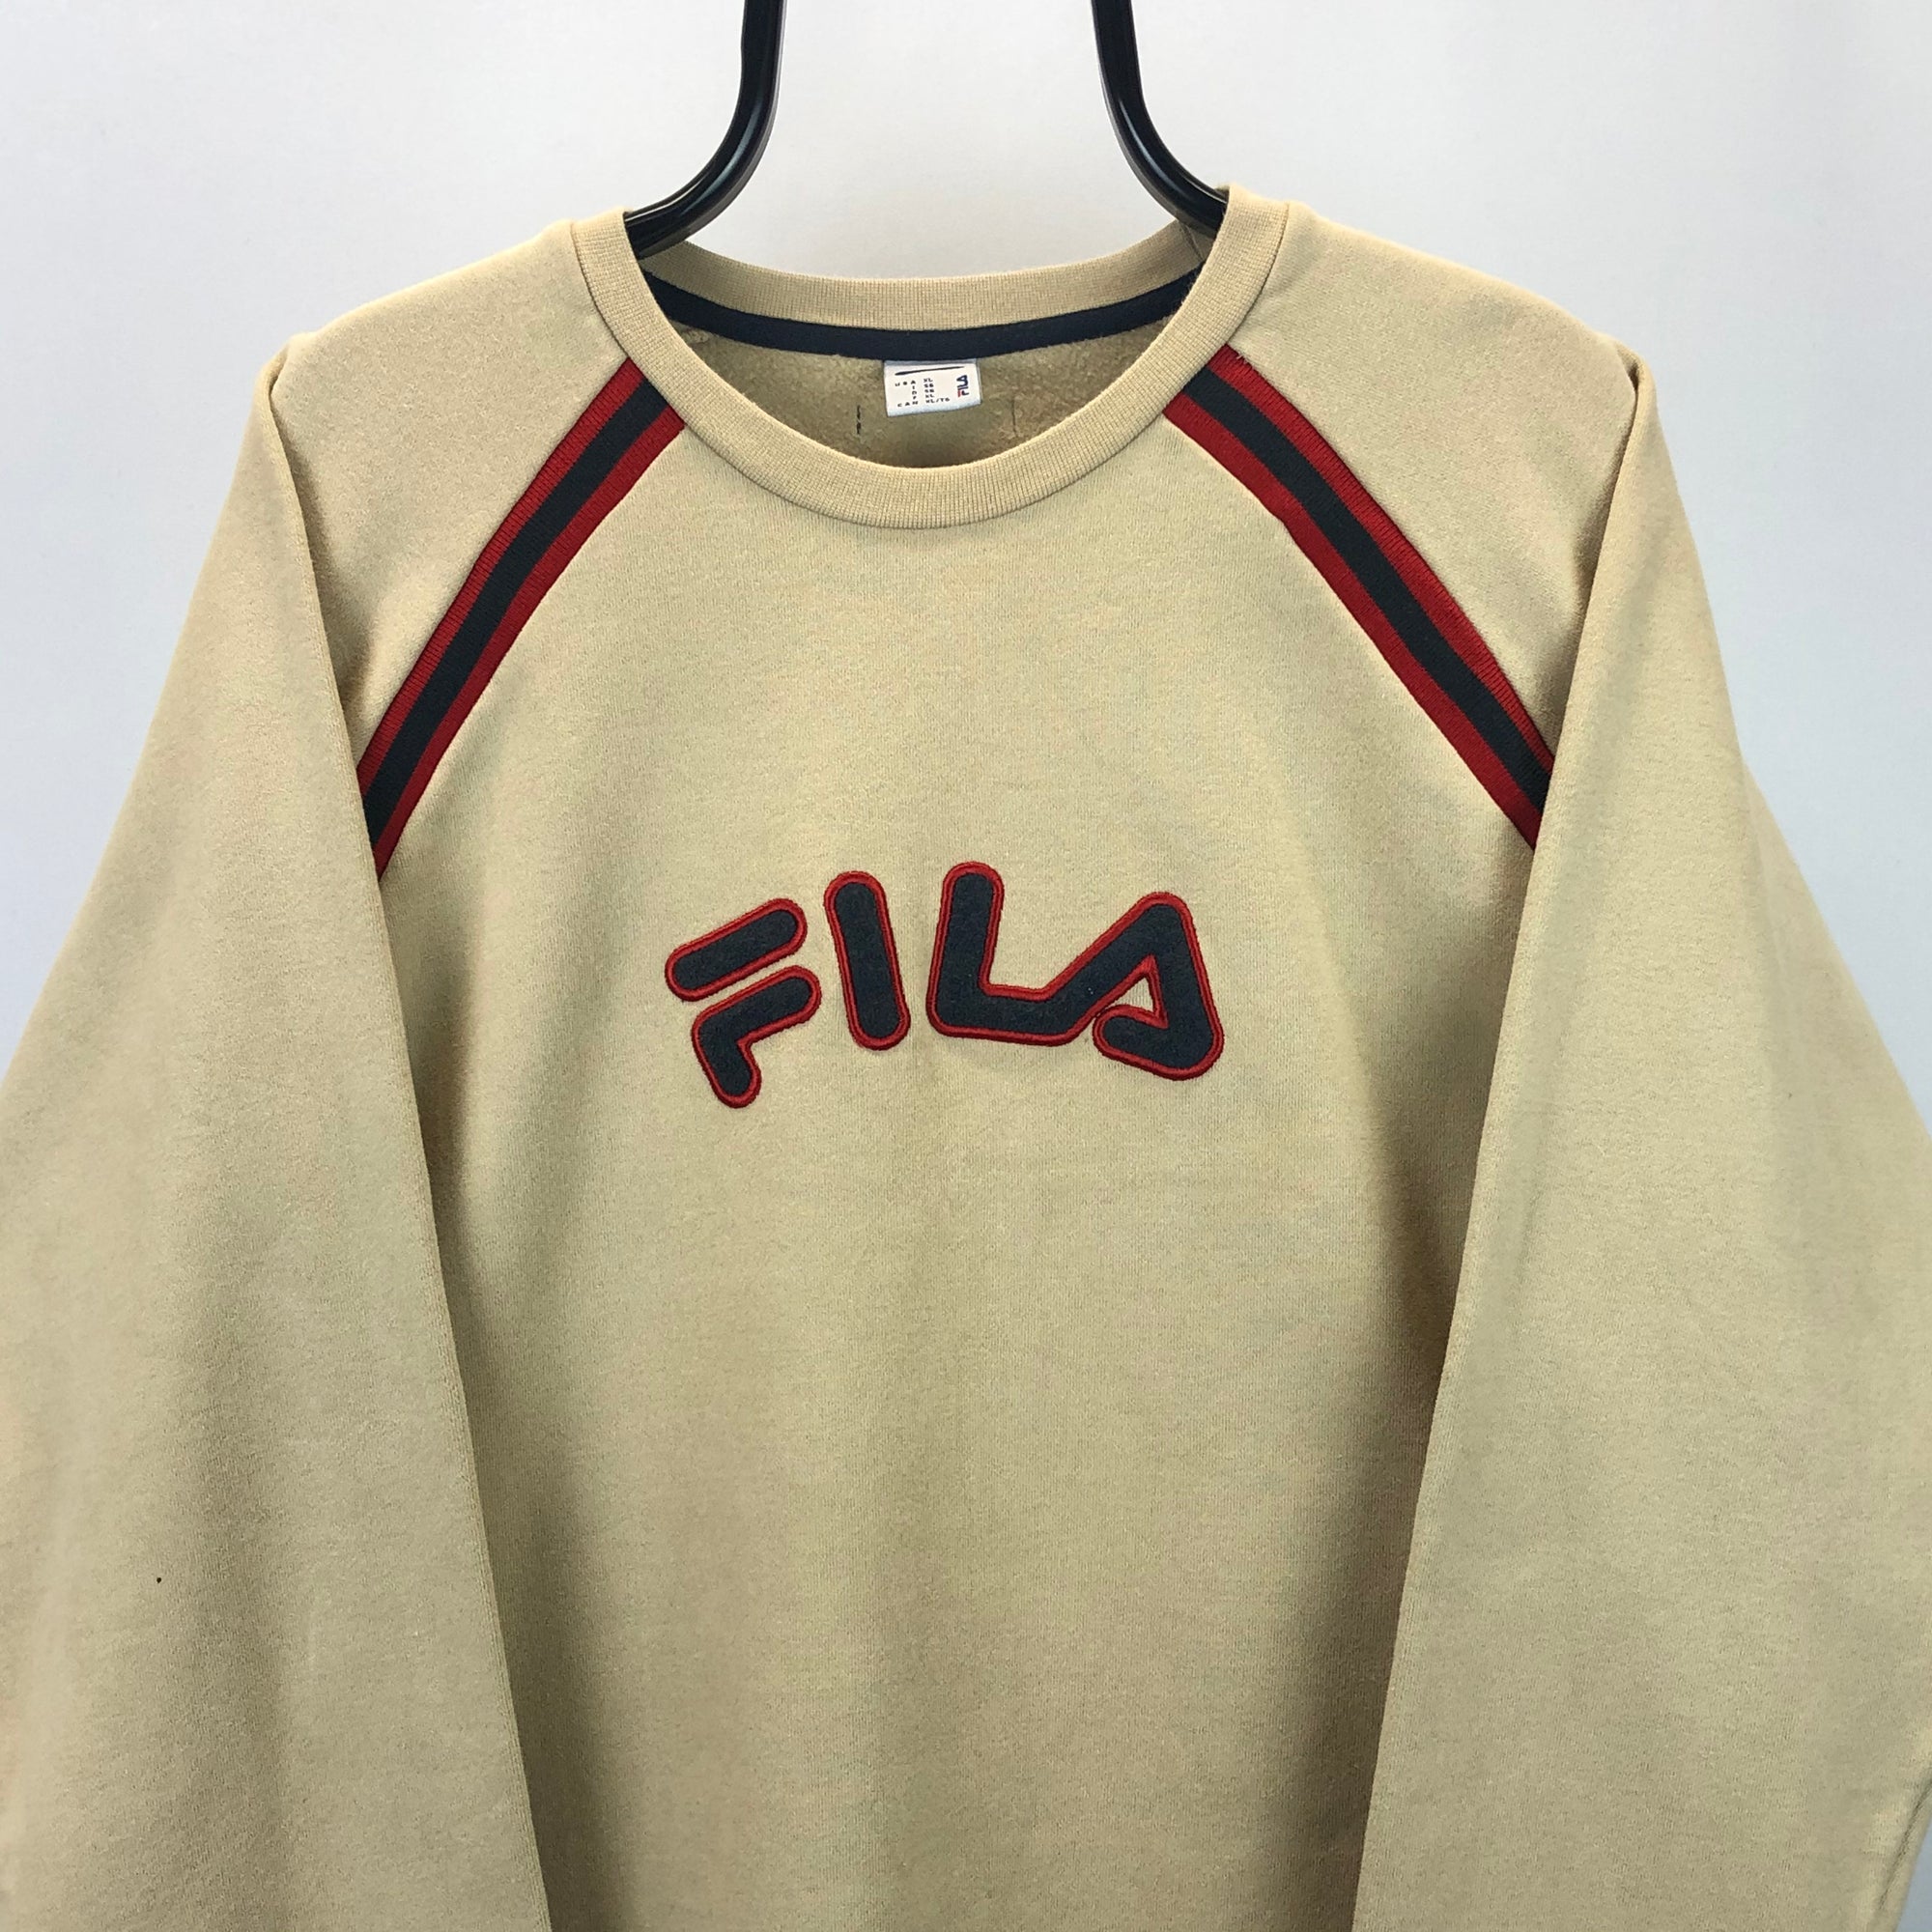 Vintage Fila Spellout Sweatshirt in Beige - Men's Medium/Women's Large